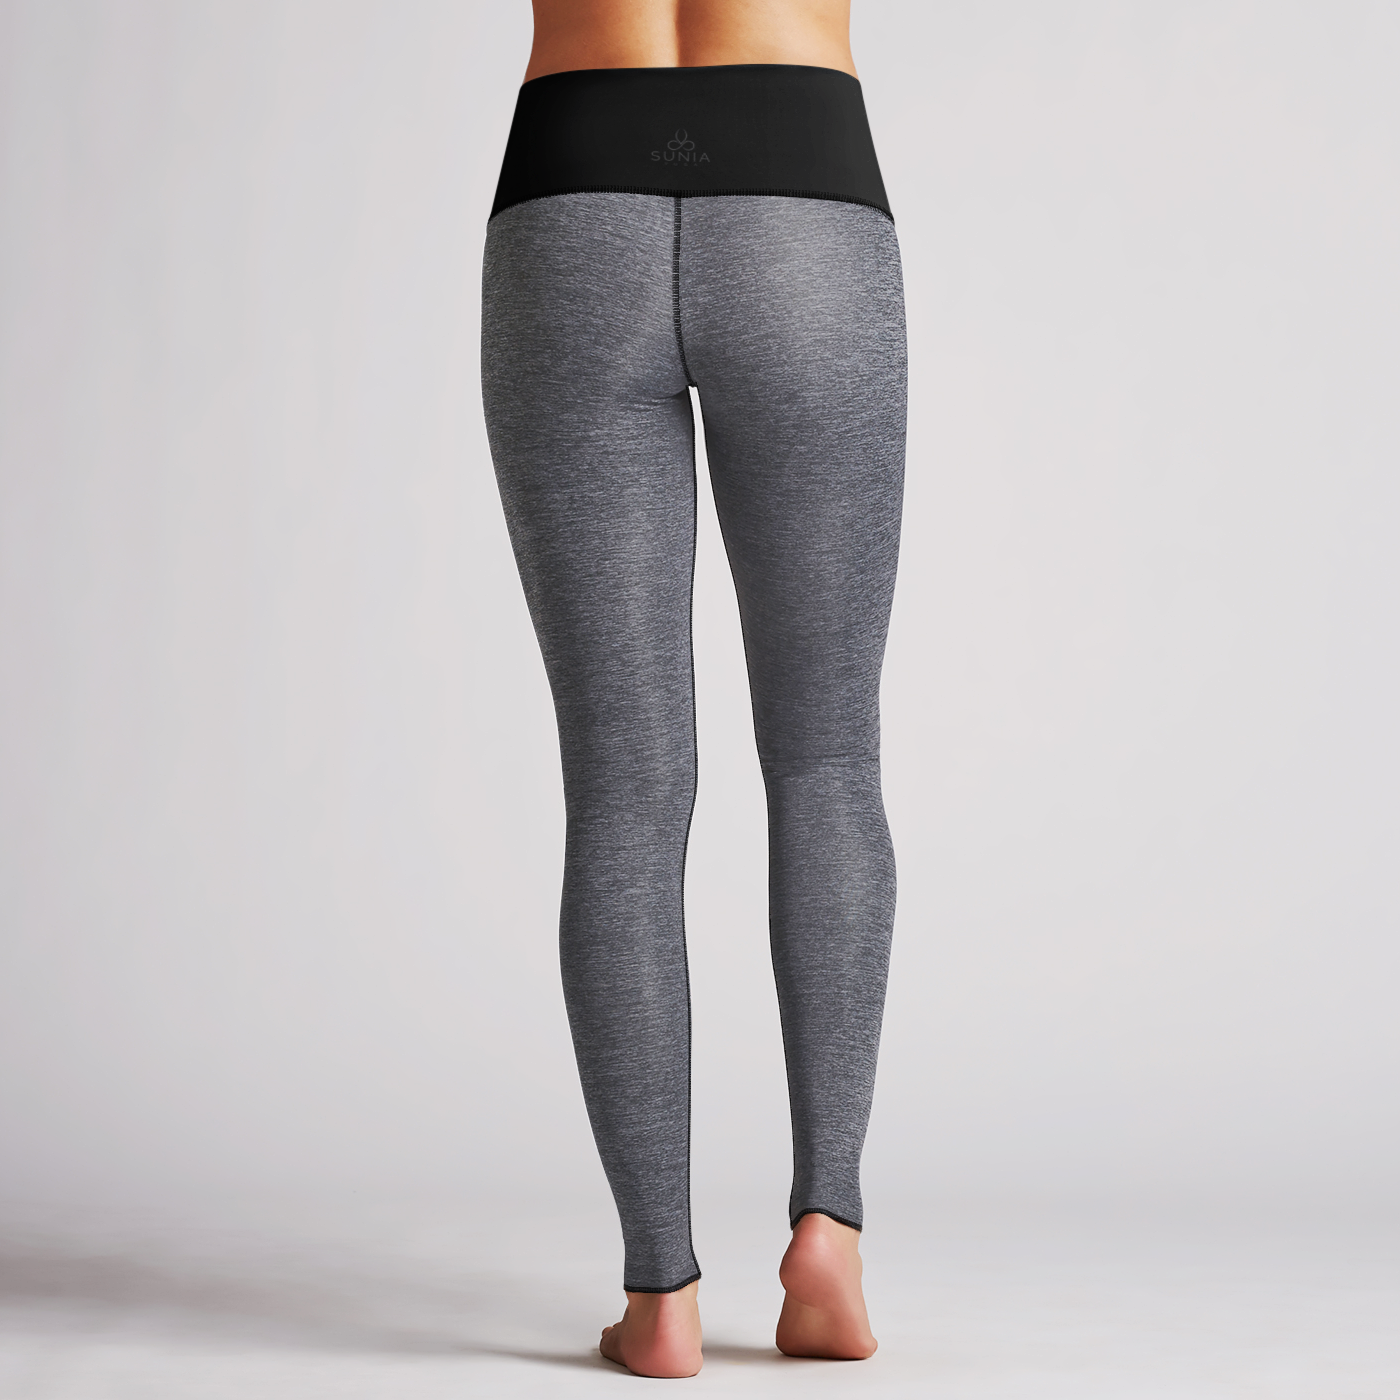 Leggings Are The New Jeans – Sunia Yoga